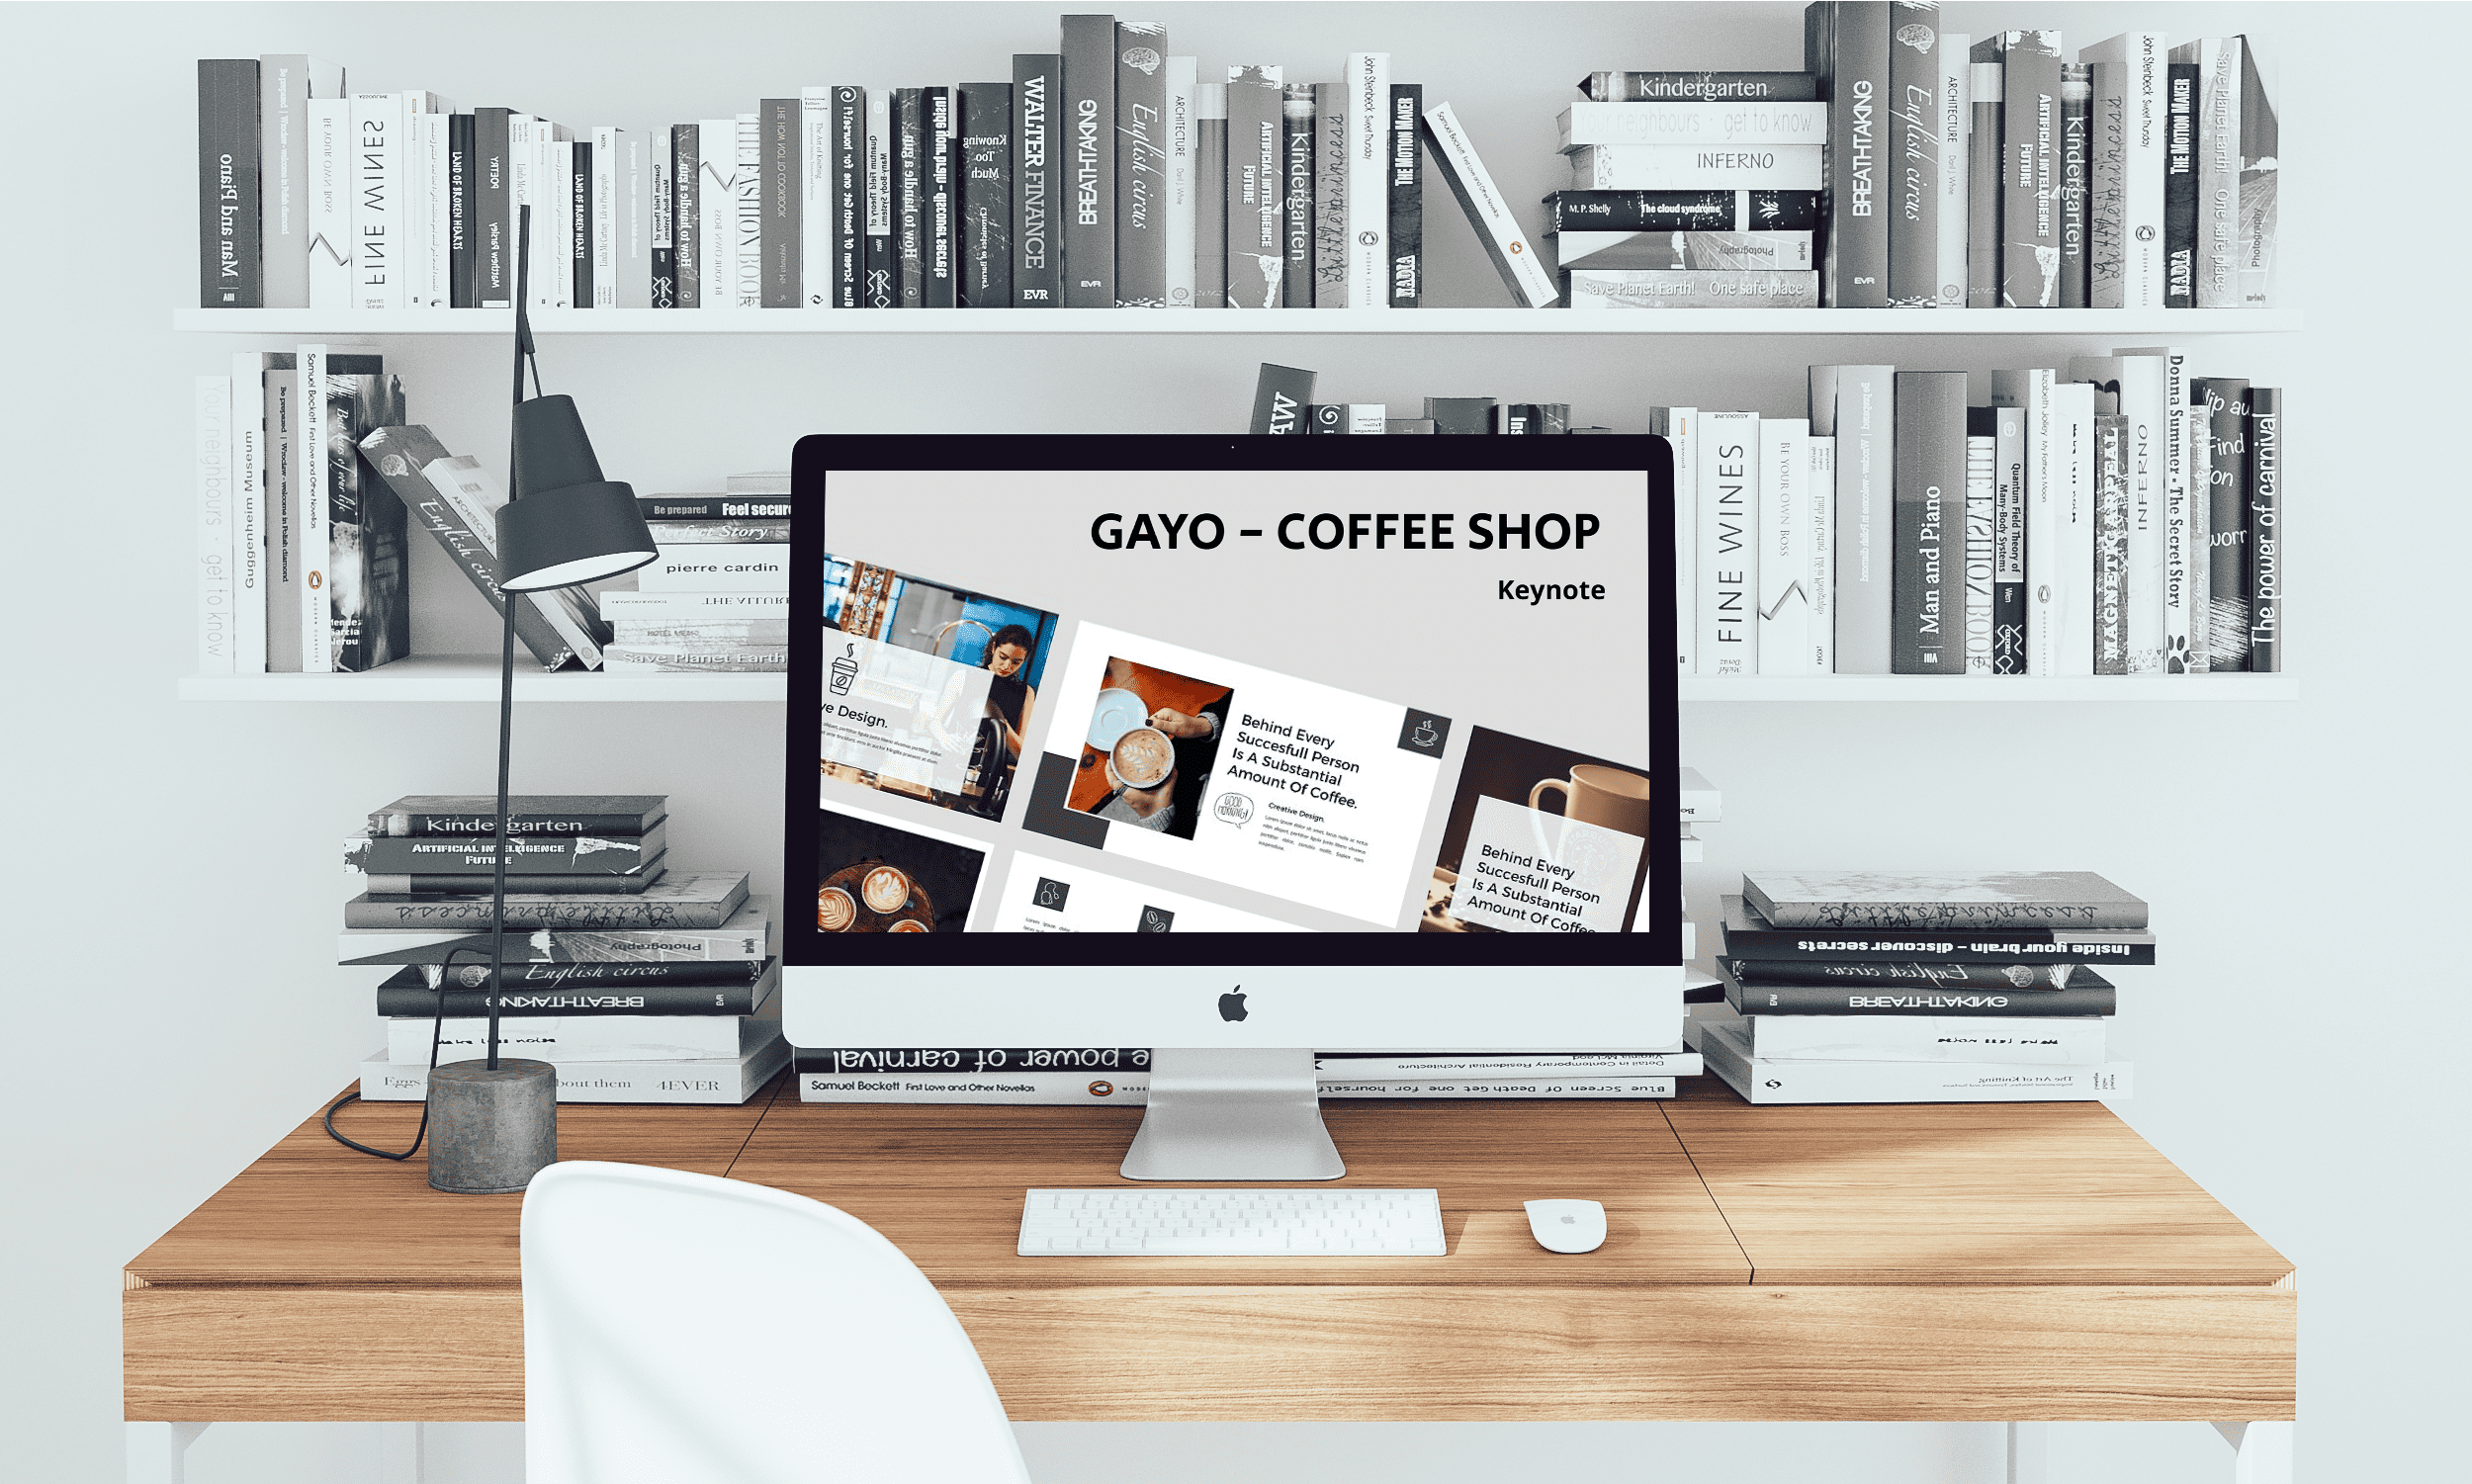 Desktop option of the Gayo - Coffee Shop Keynote.